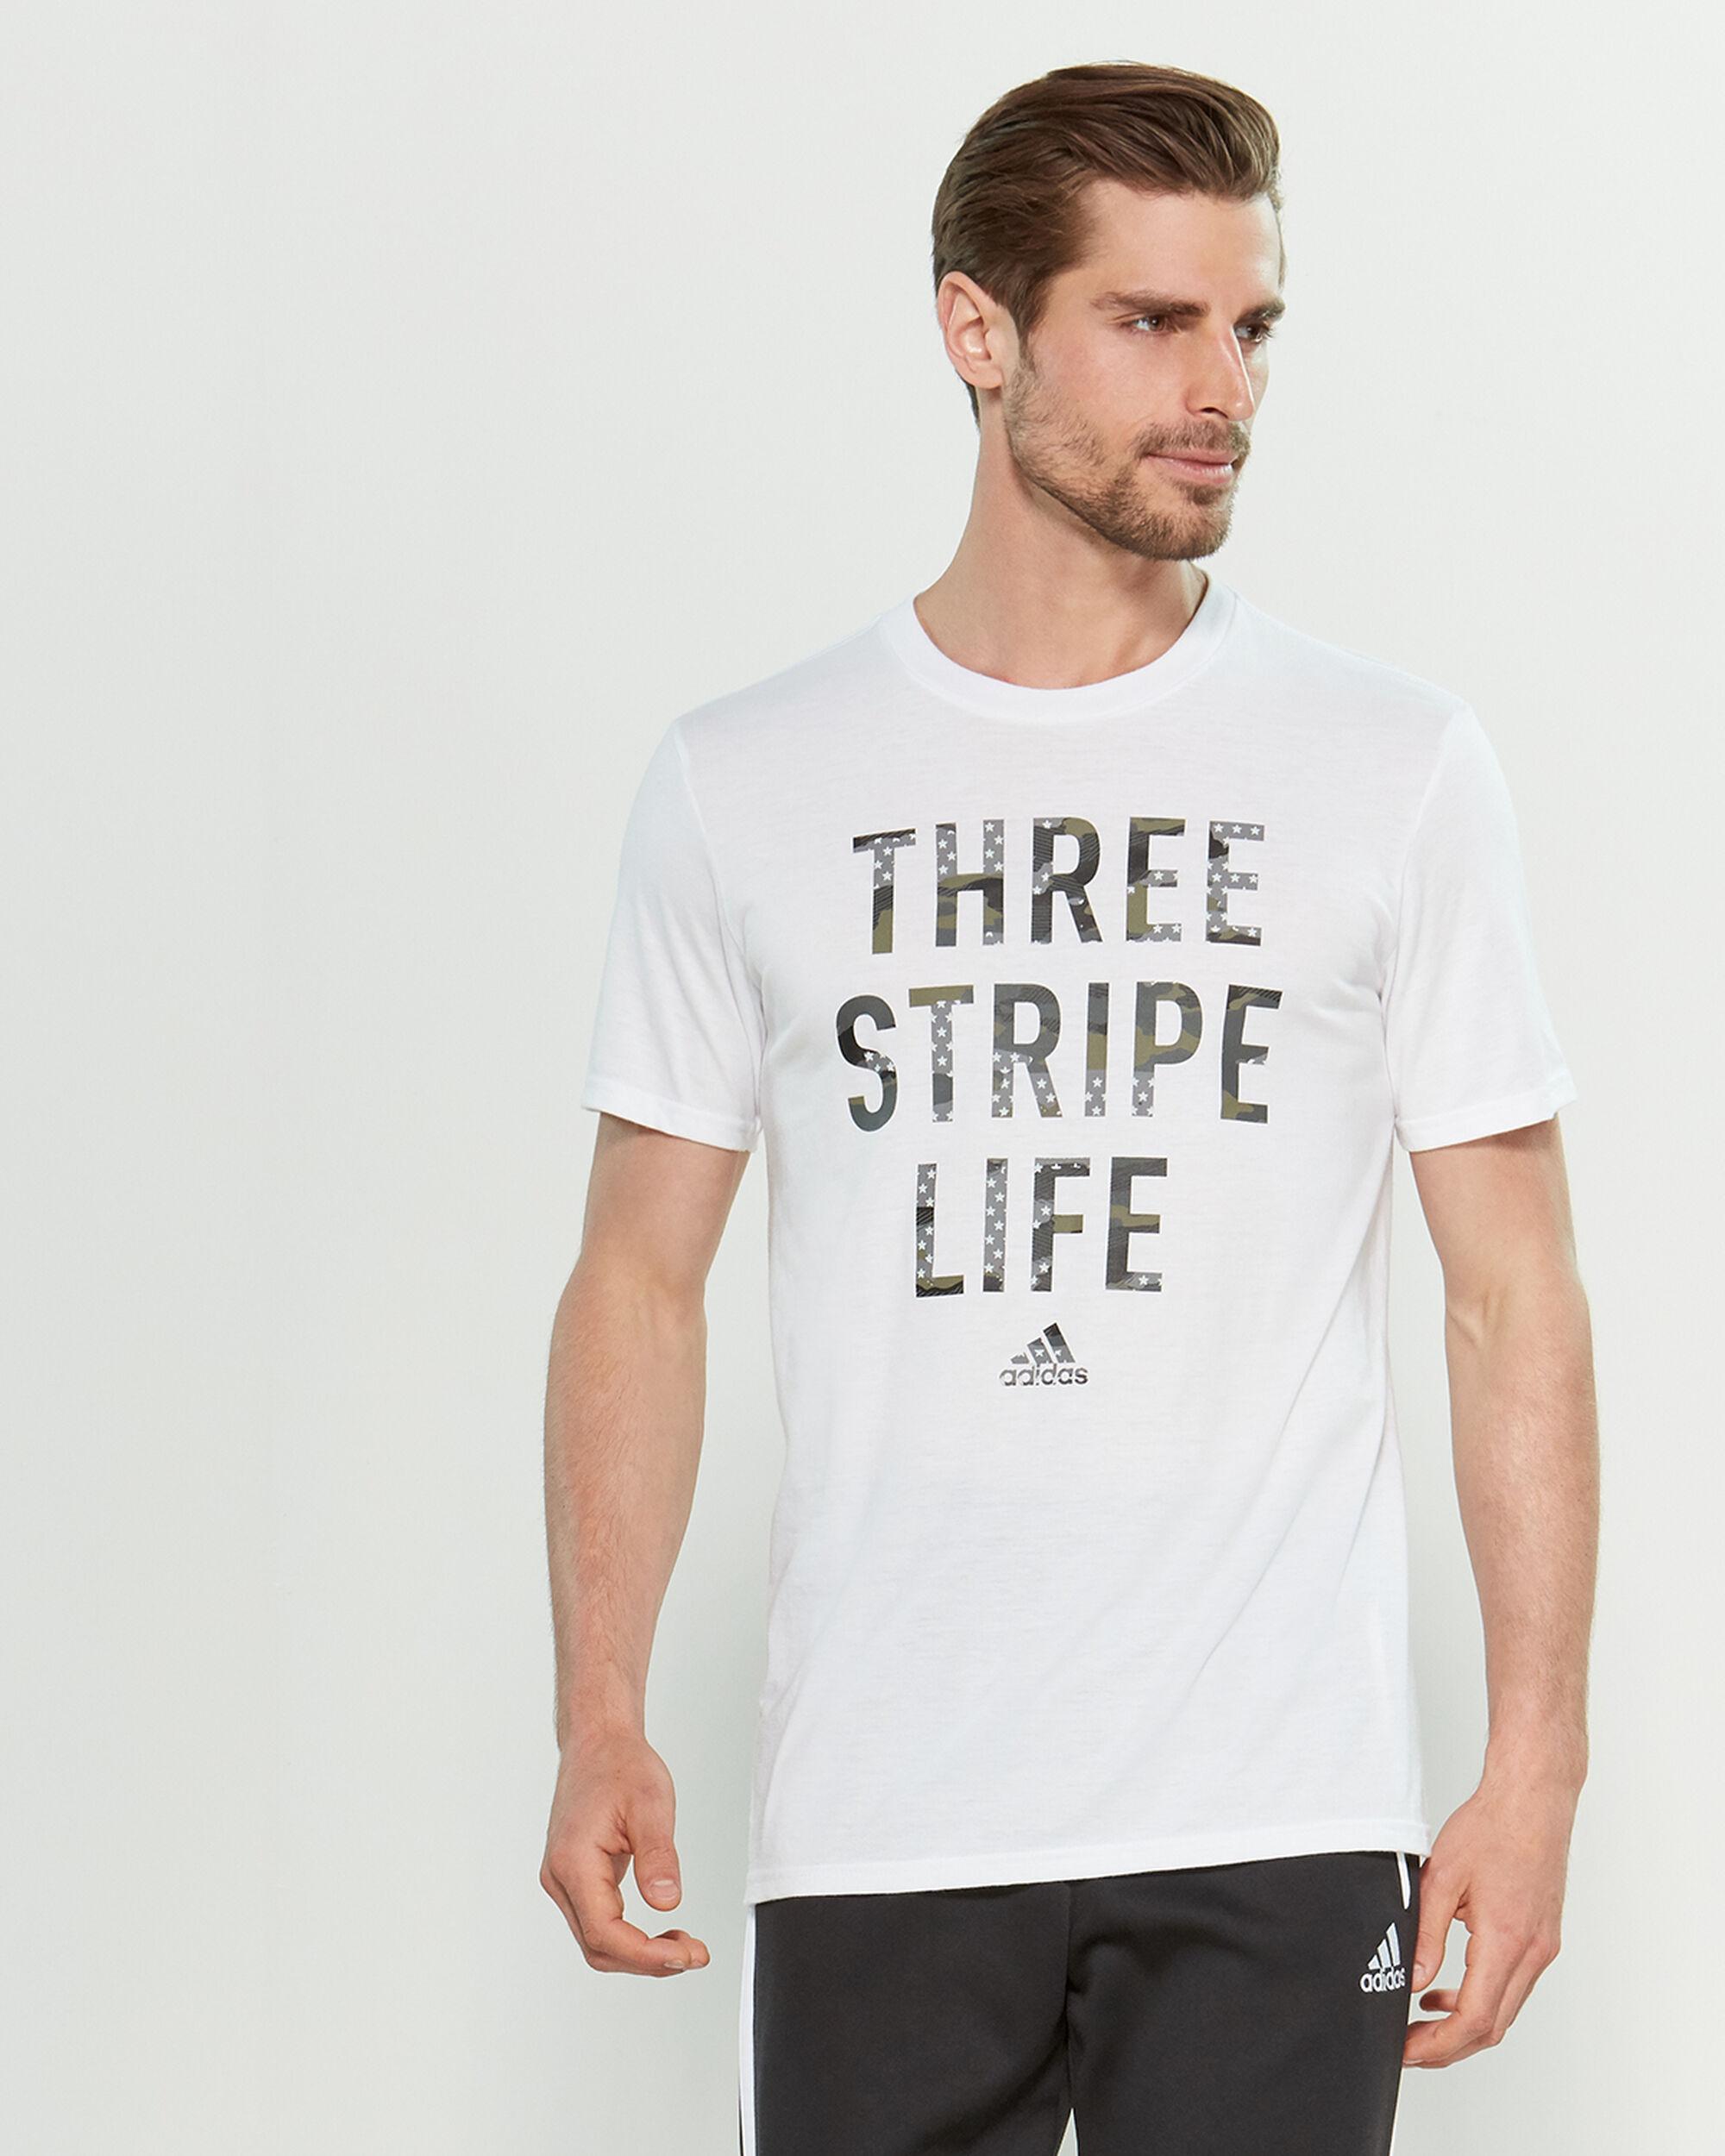 three stripe life t shirt